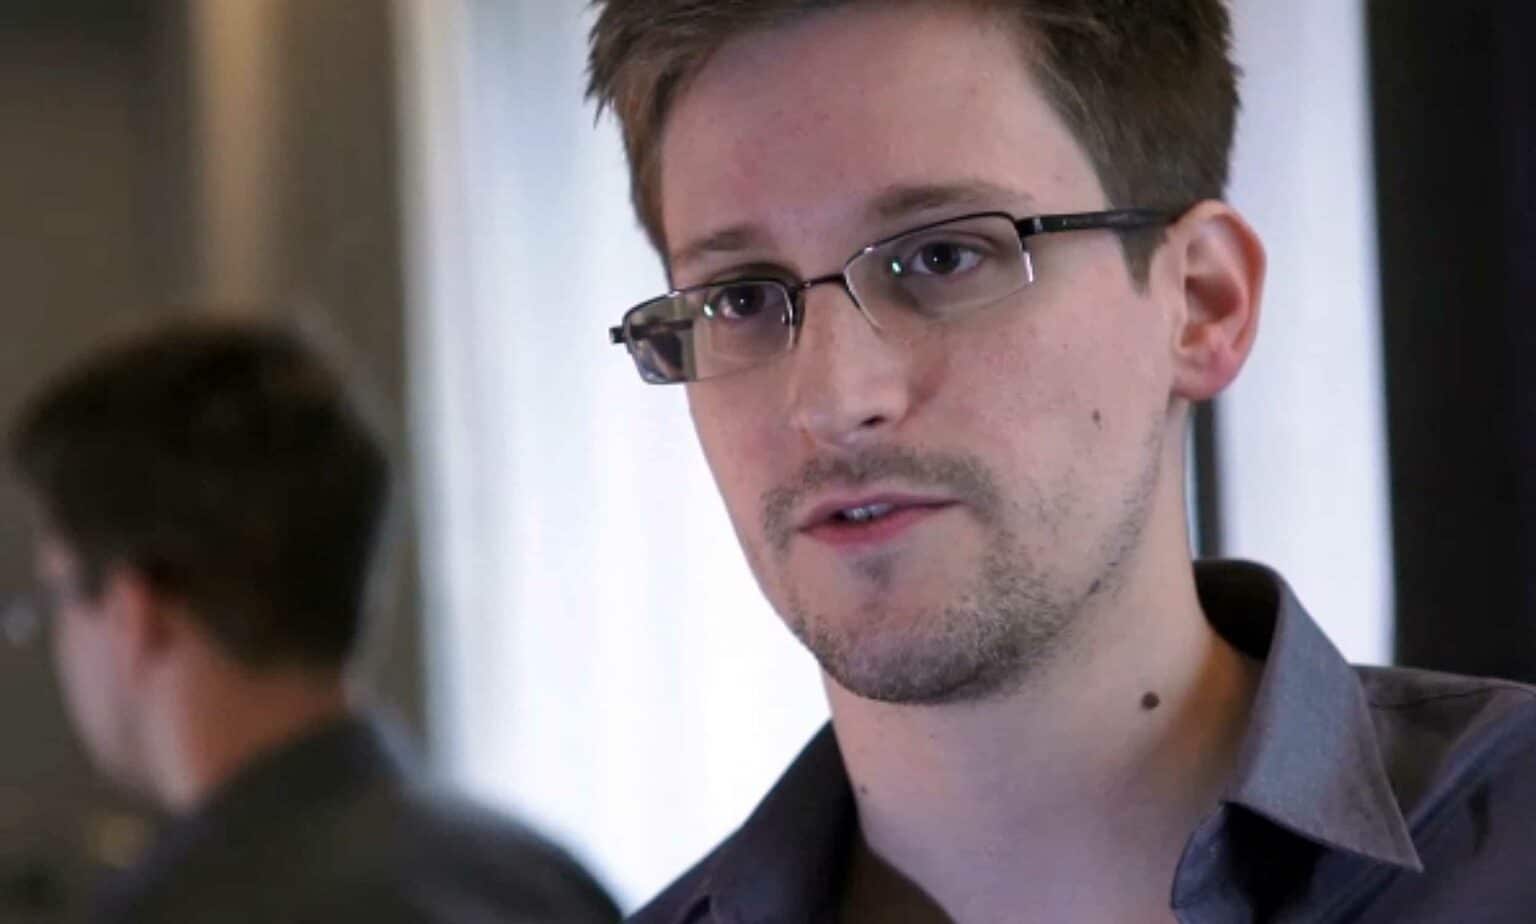 Edward Snowden is now a Russian citizen